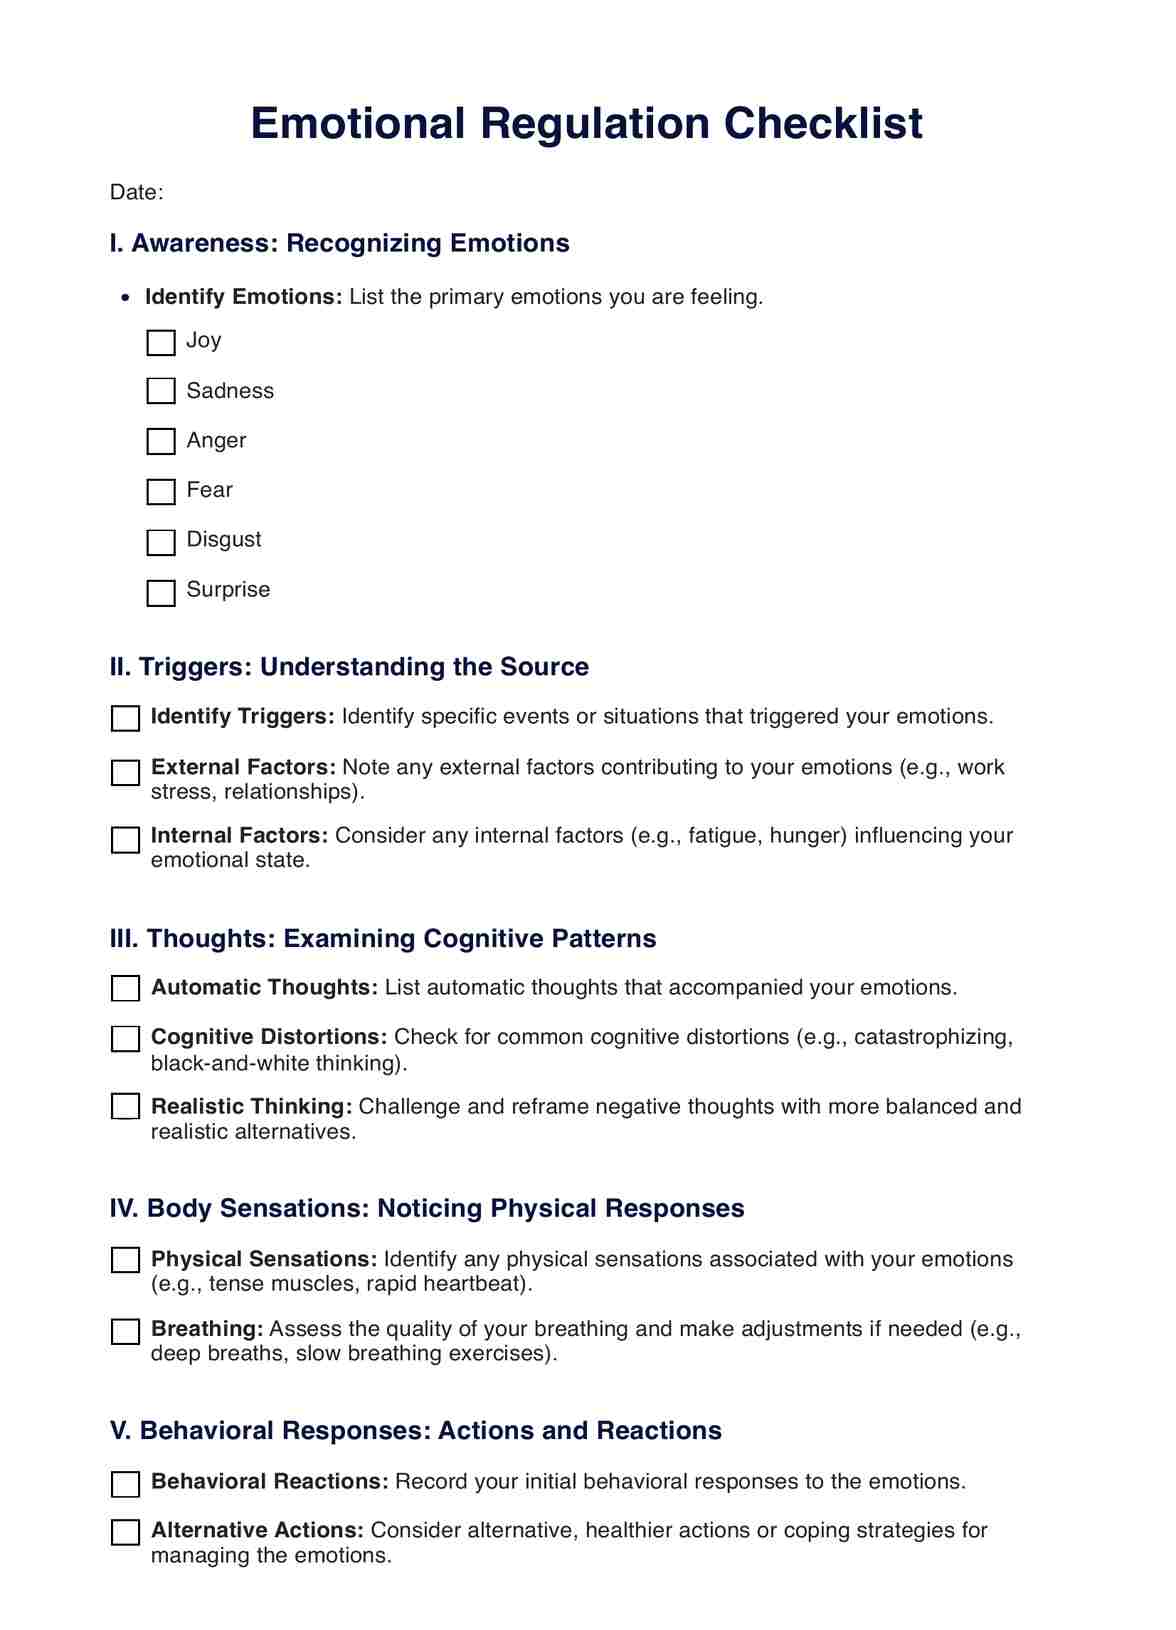 Emotion Regulation Checklist PDF Example